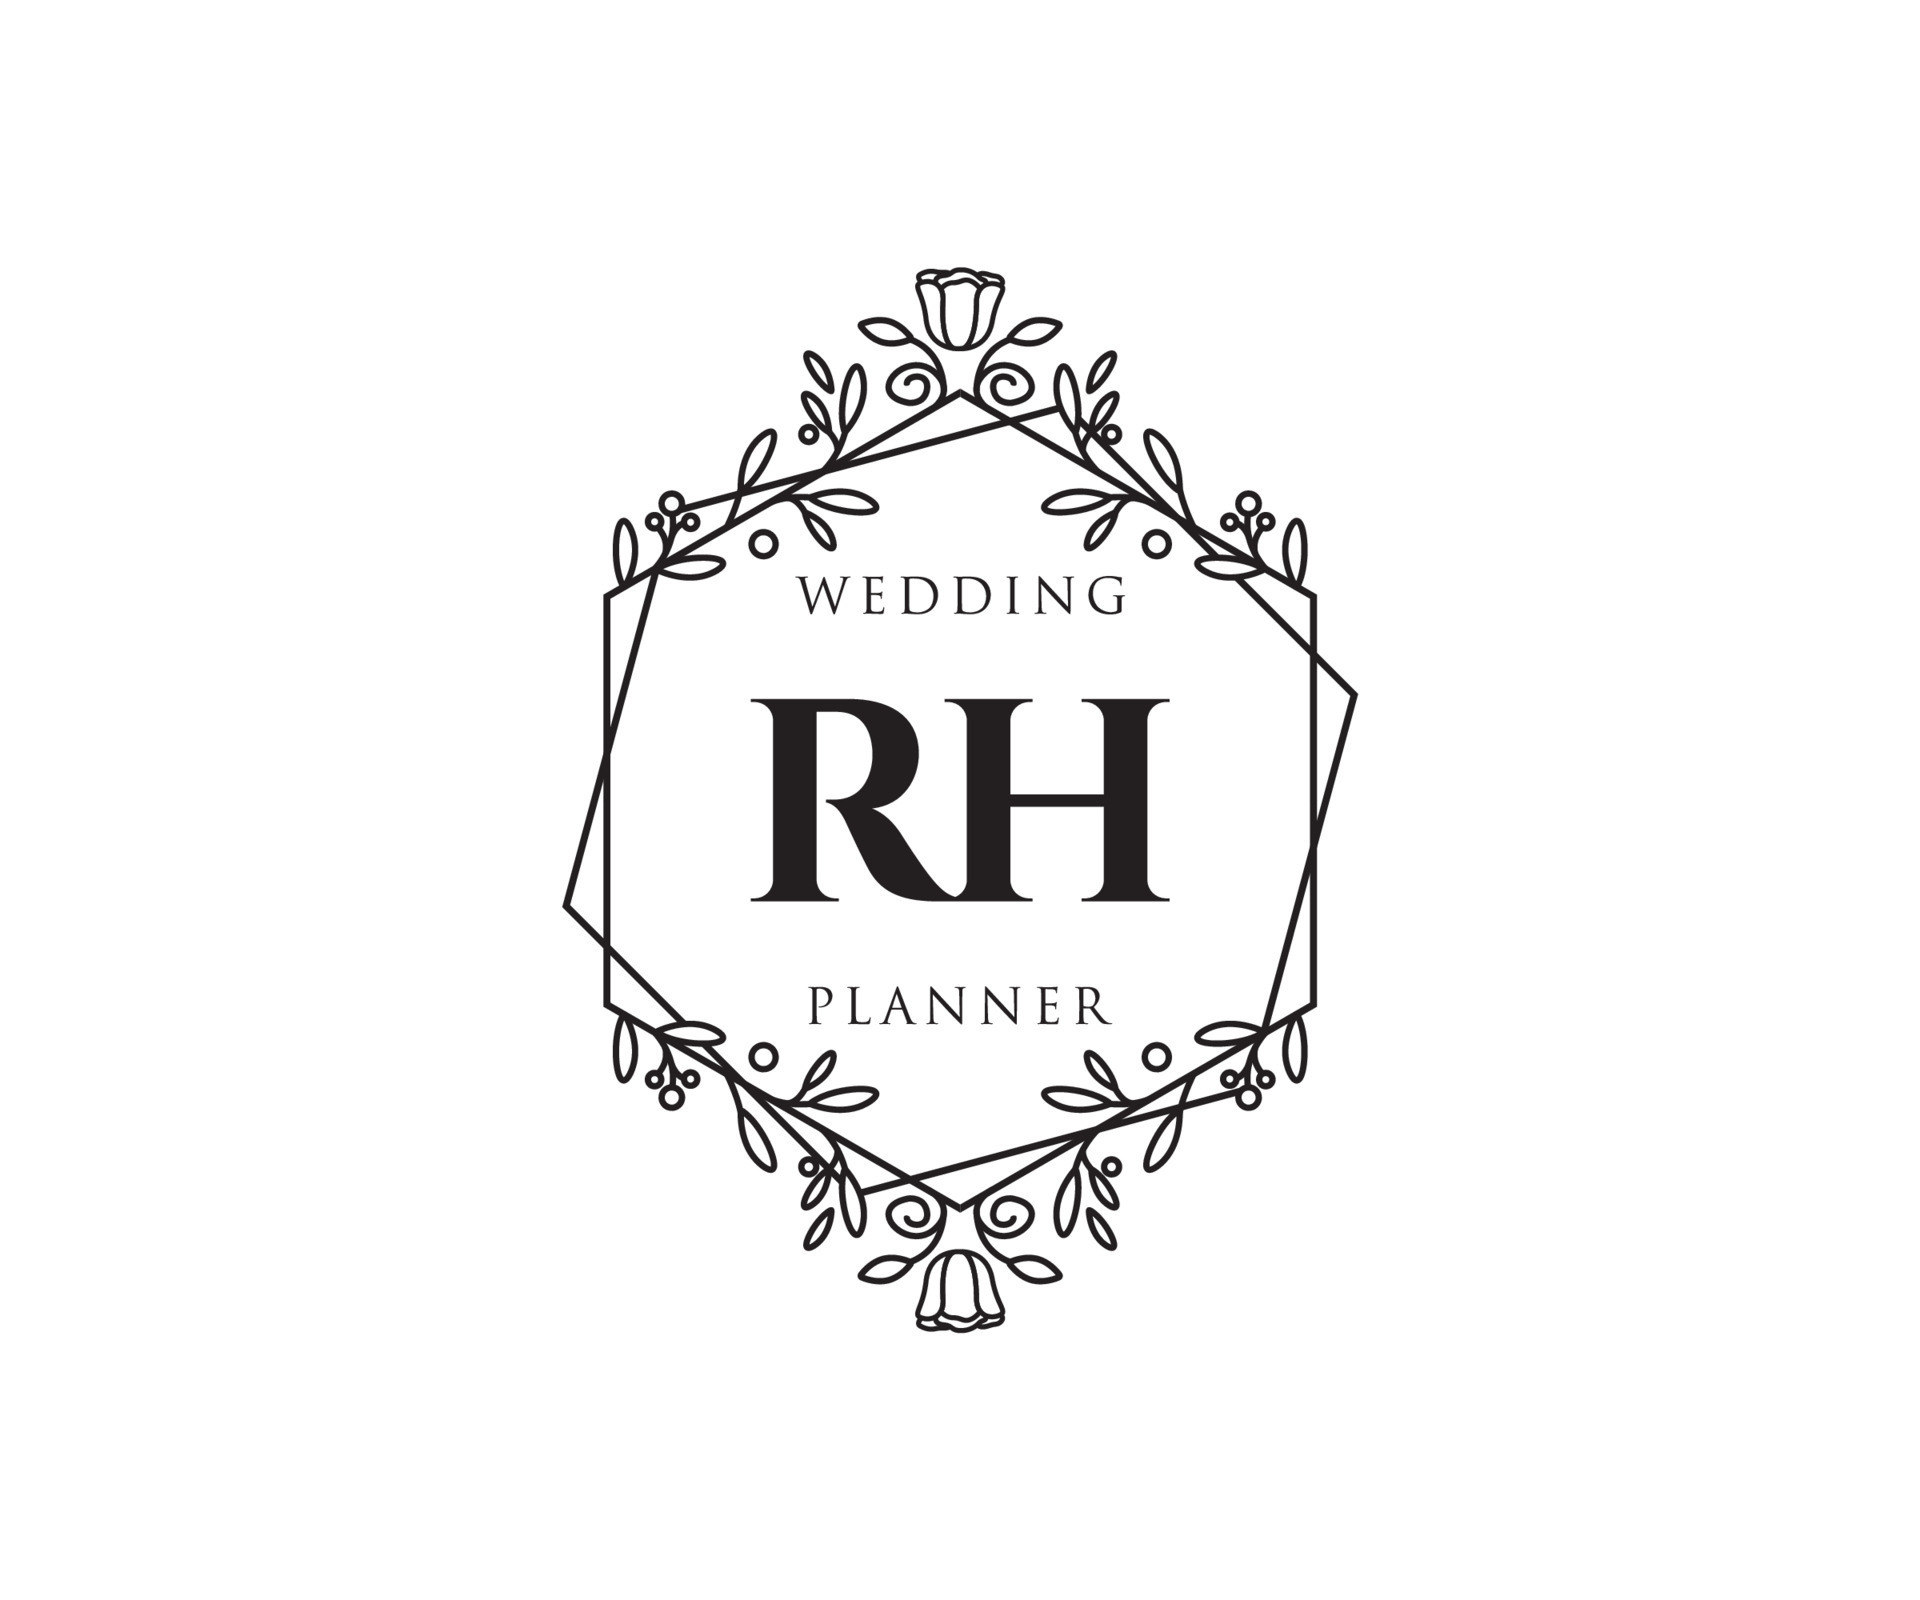 Rh initials letter wedding monogram logos Vector Image